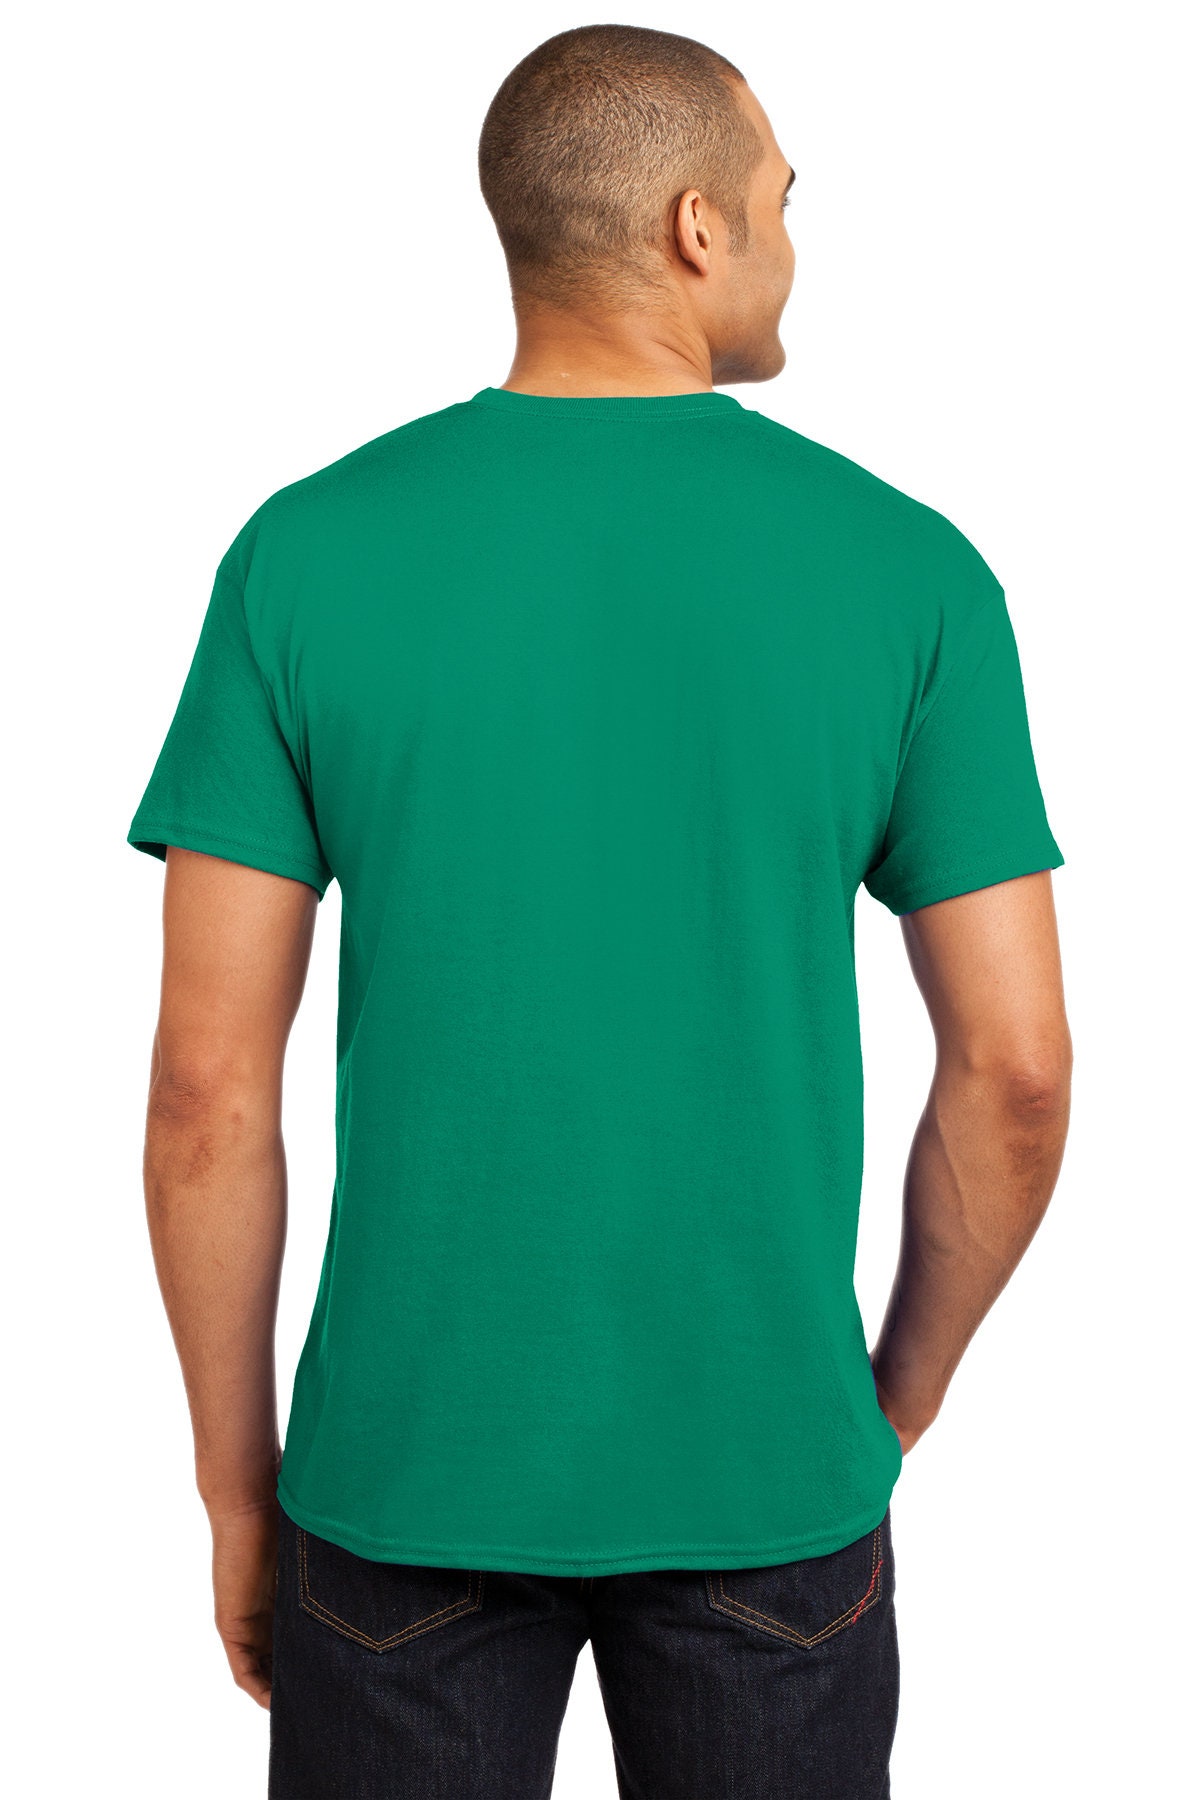 6 T-shirt With Company Logo Custom Design Custom Embroidered | Etsy